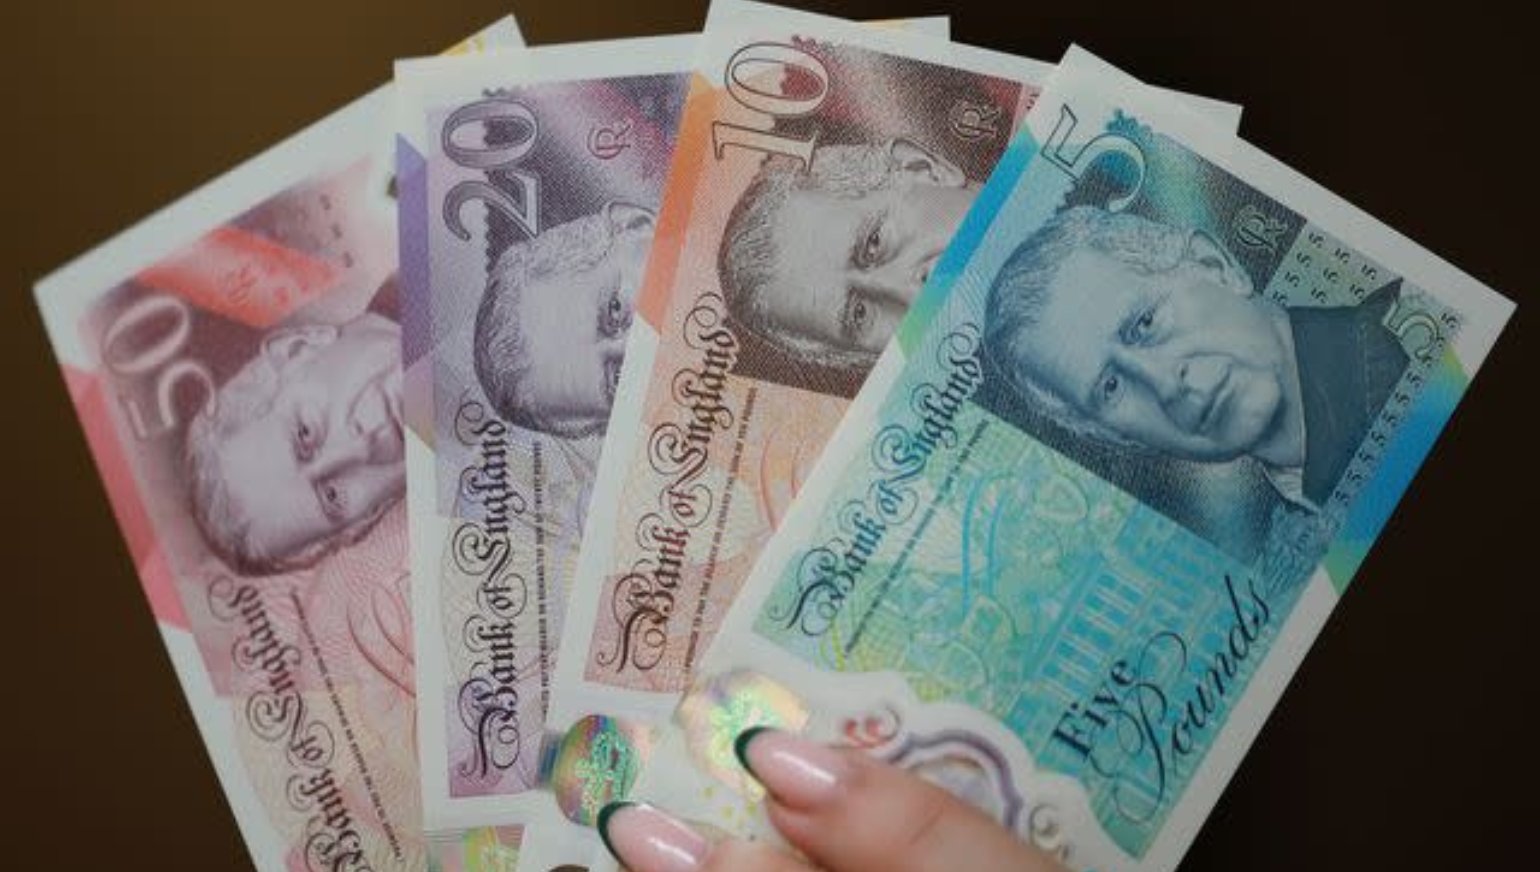 King Charles Banknotes Enter Circulation in the UK